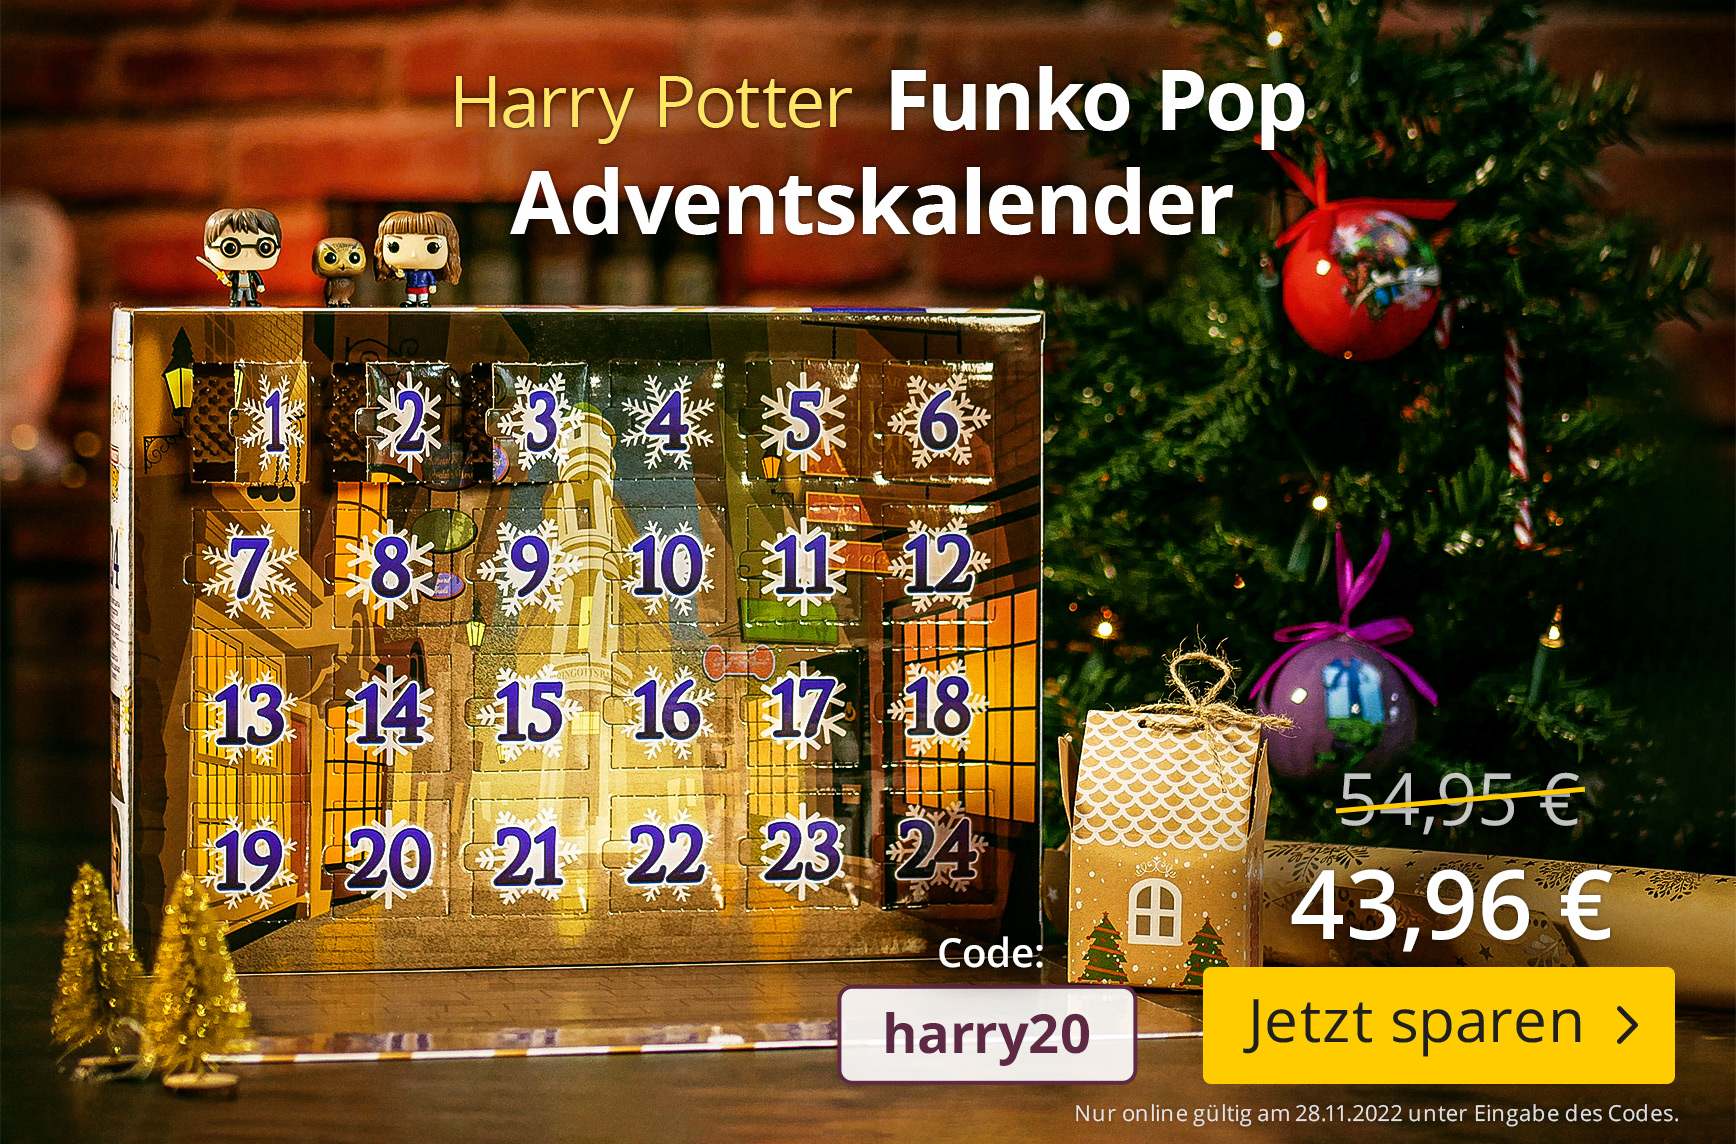 Harry Potter - Funko Pop Adventskalender 2022 - 43,96 EUR statt 54,95 EUR mit Code harry20 - nur heute